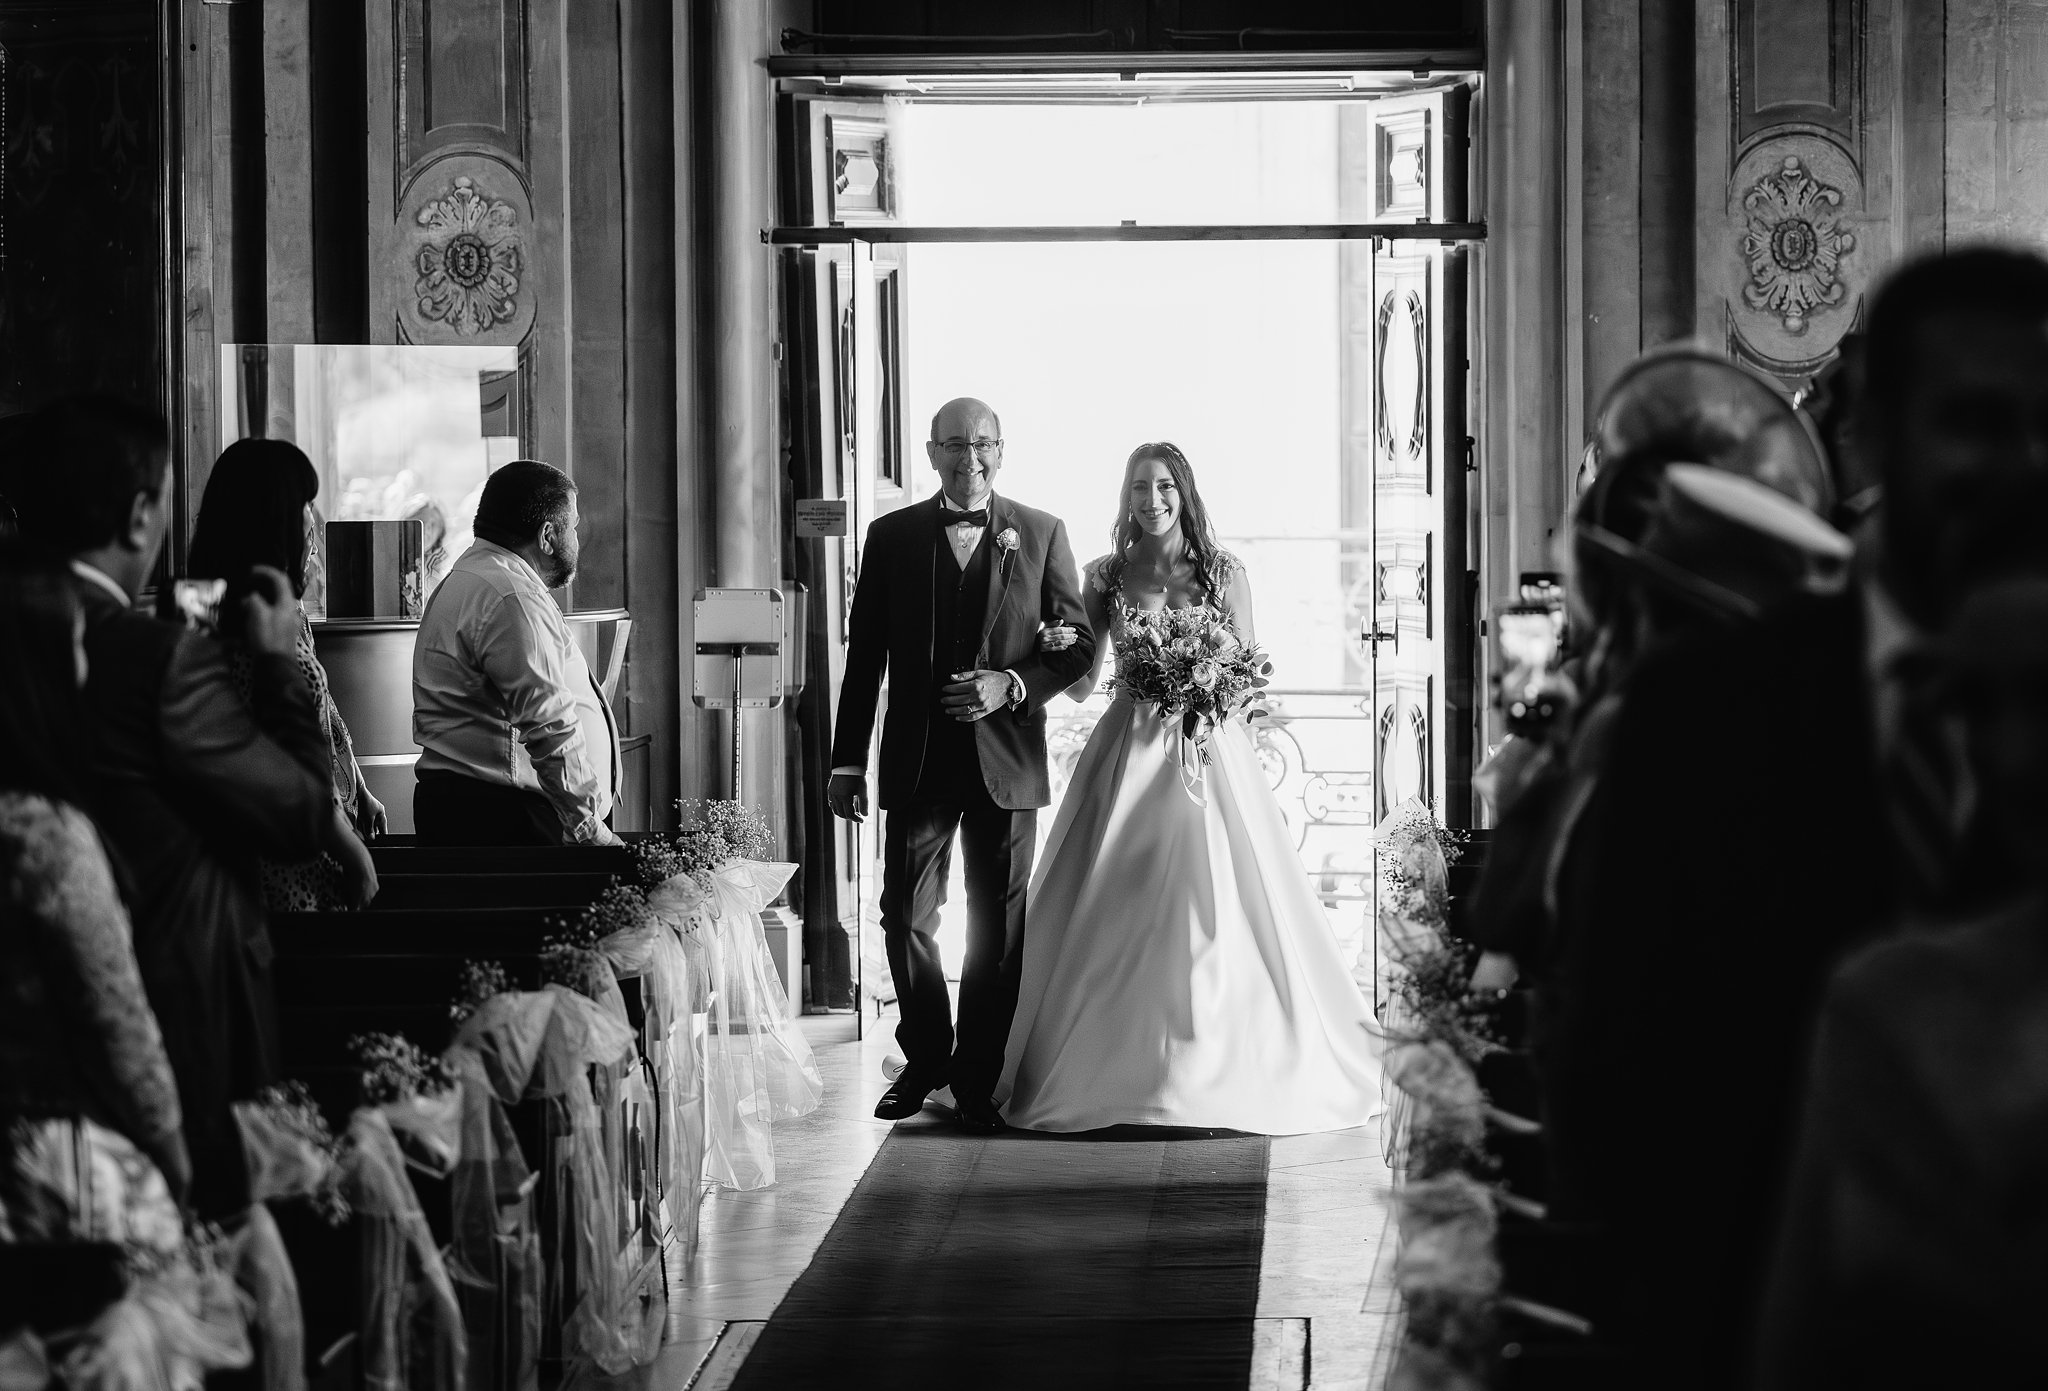 Desiree and Andrei's Wedding at Villa Mdina Naxxar_0029.jpg